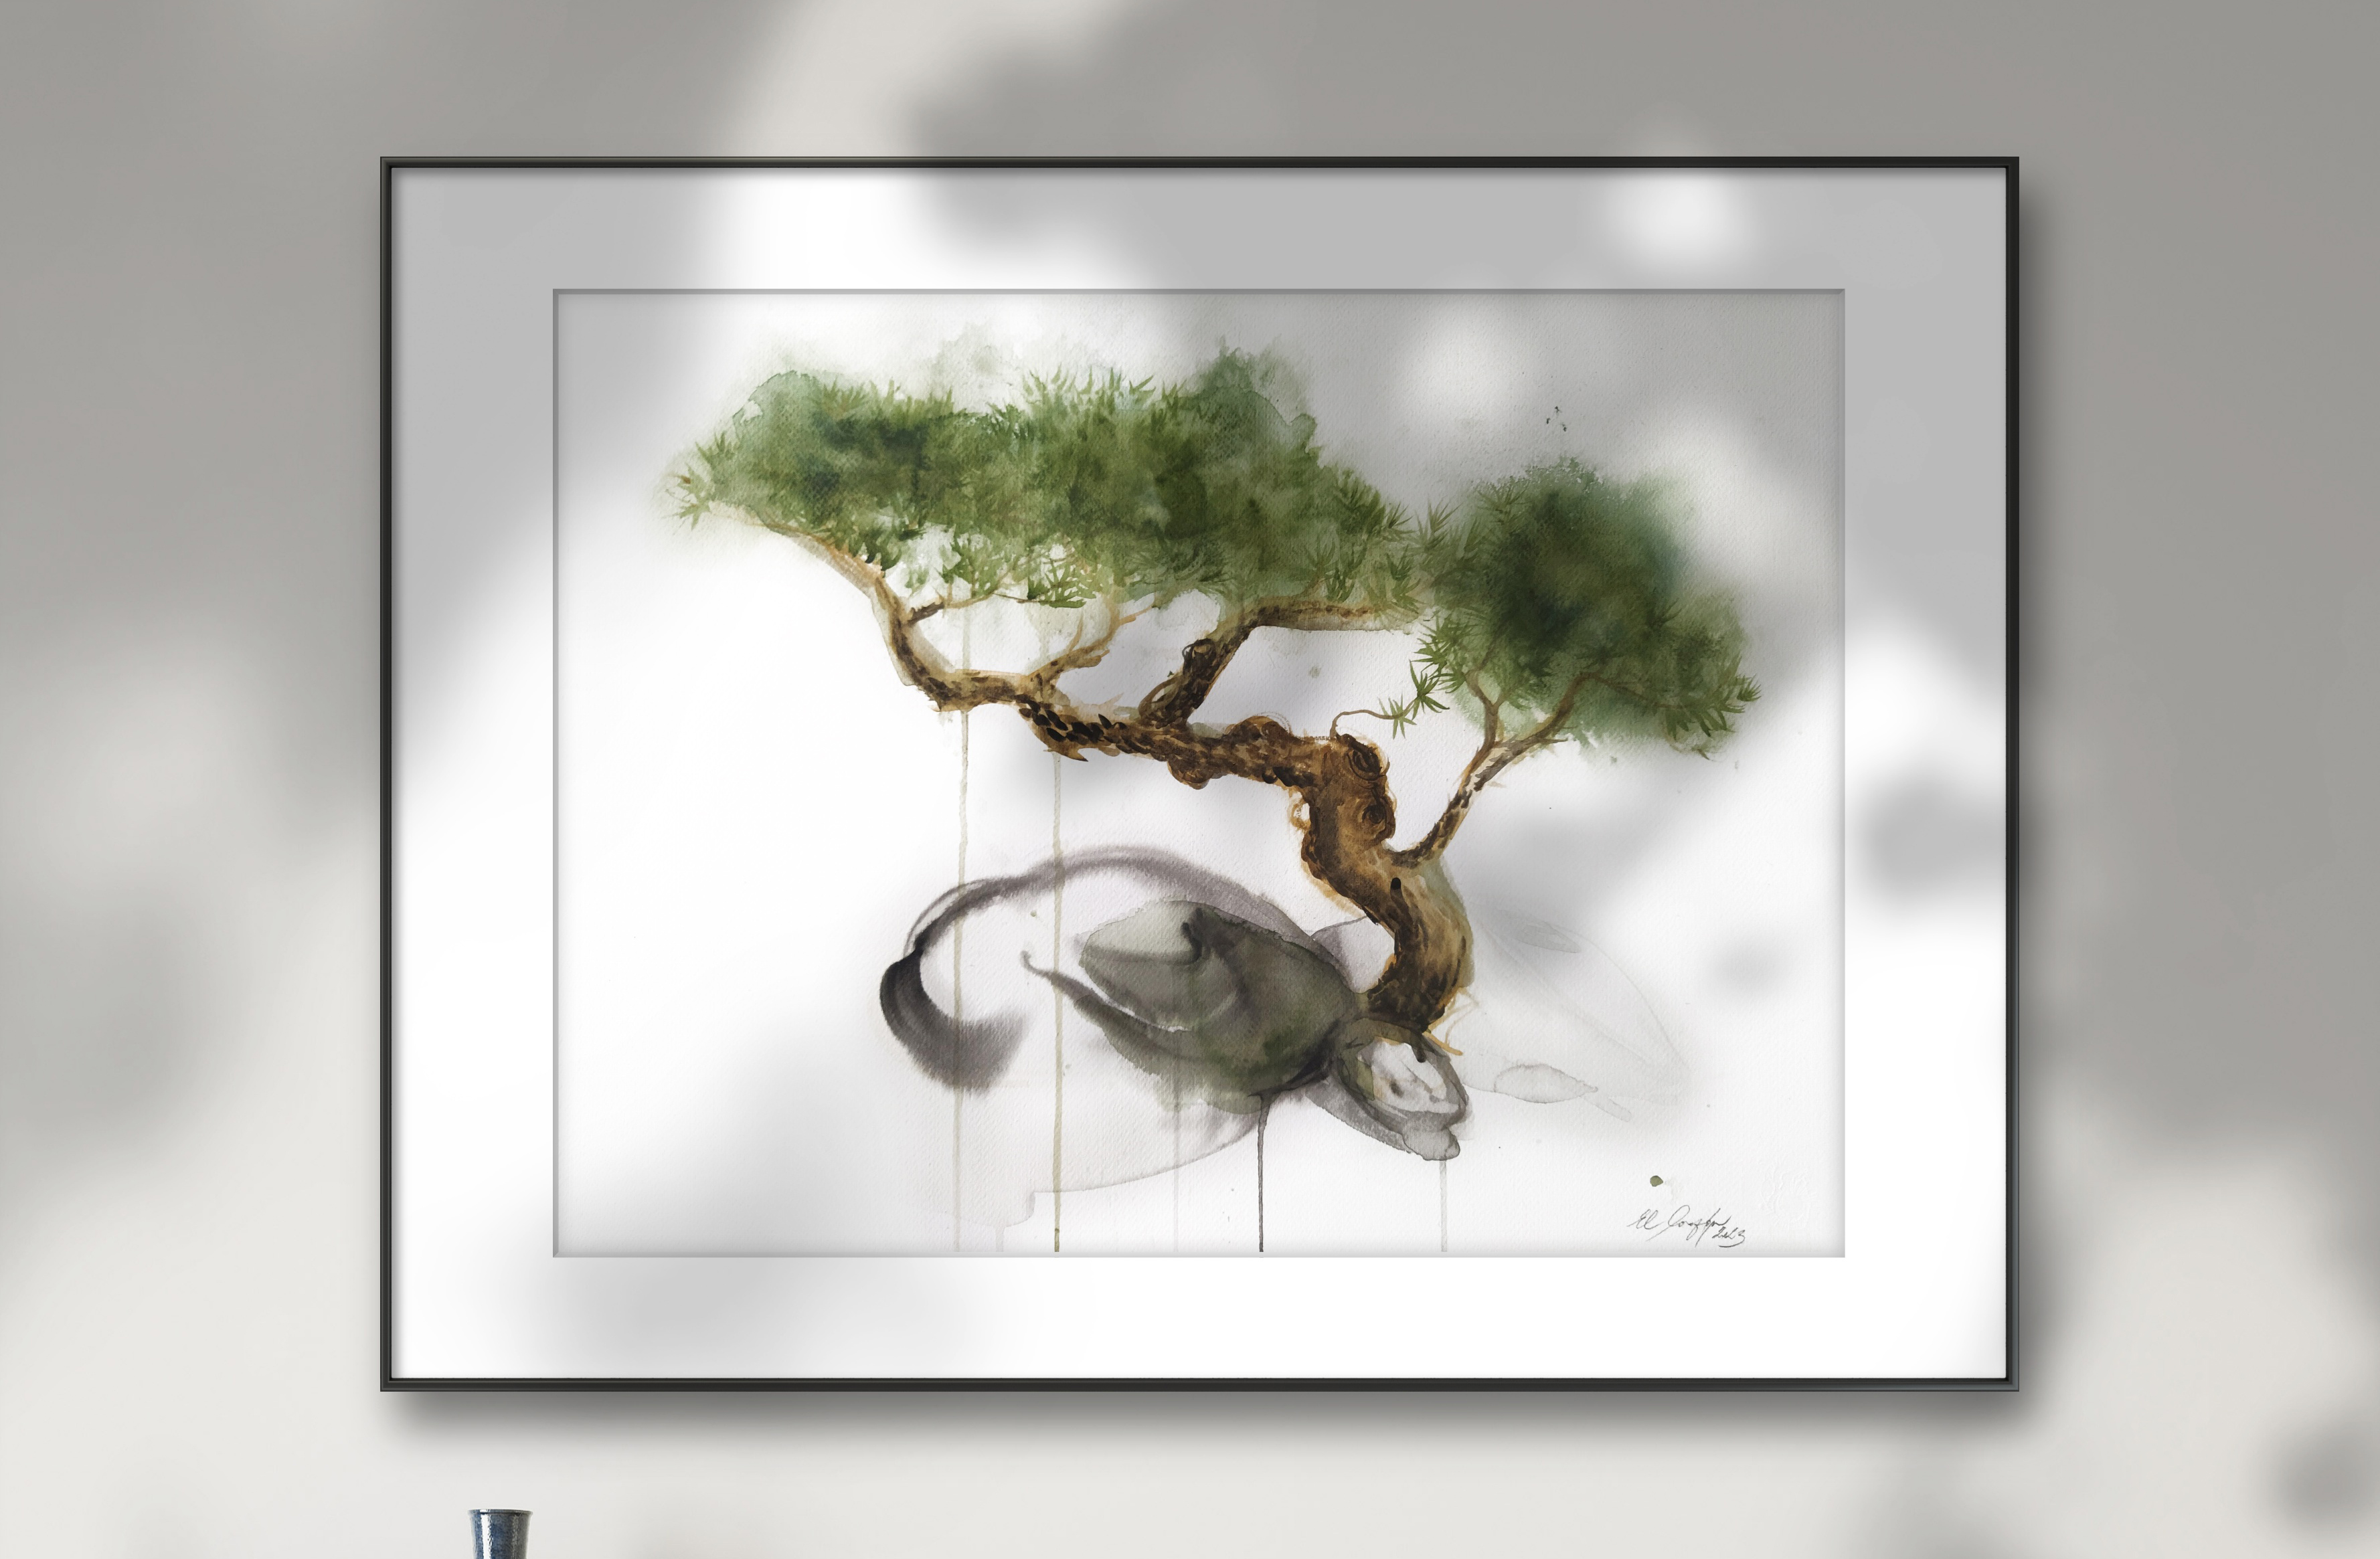 Maľba "Zen pine"